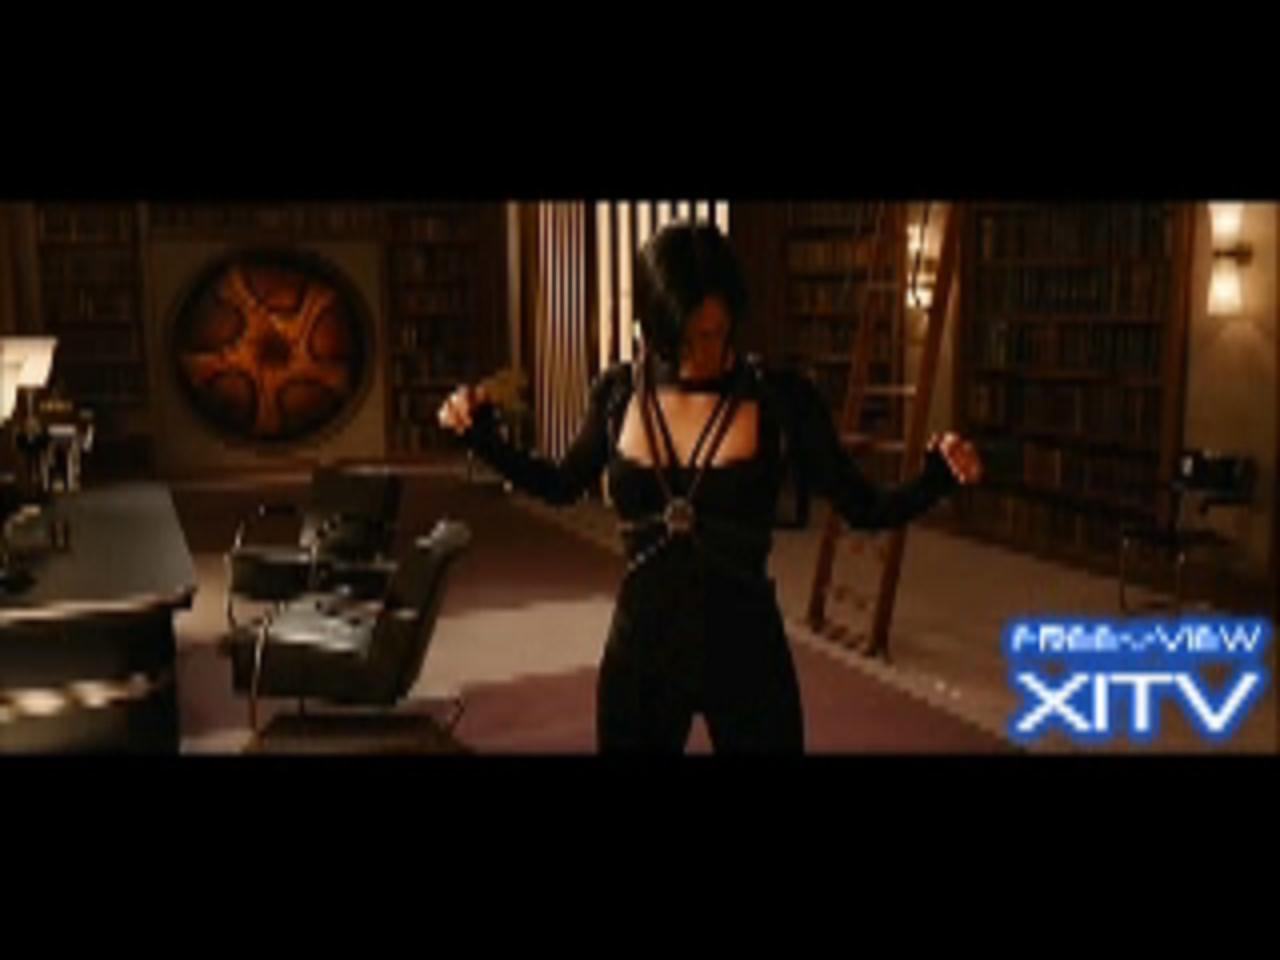 XITV FREE <> VIEW "AEON FLUX!" Starring Charlize Theron!